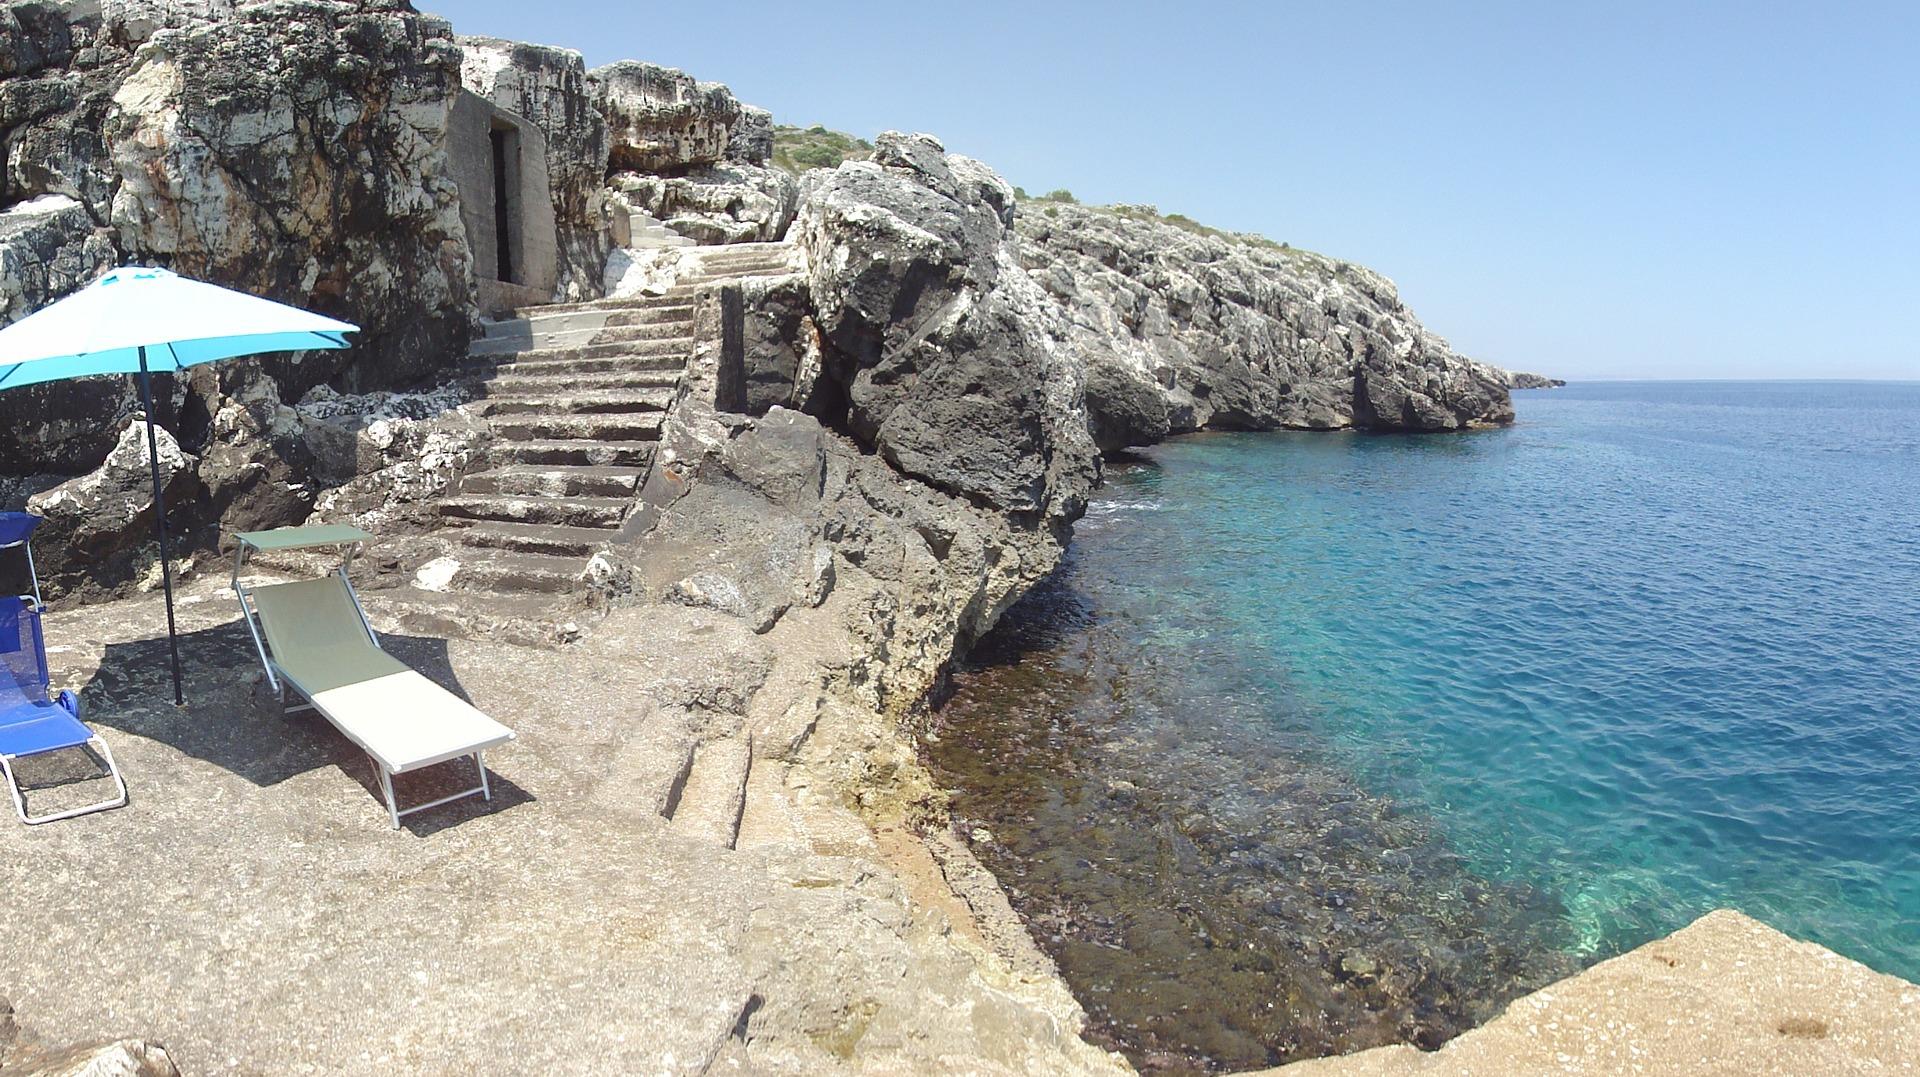 Private rocky cove sea access with platform